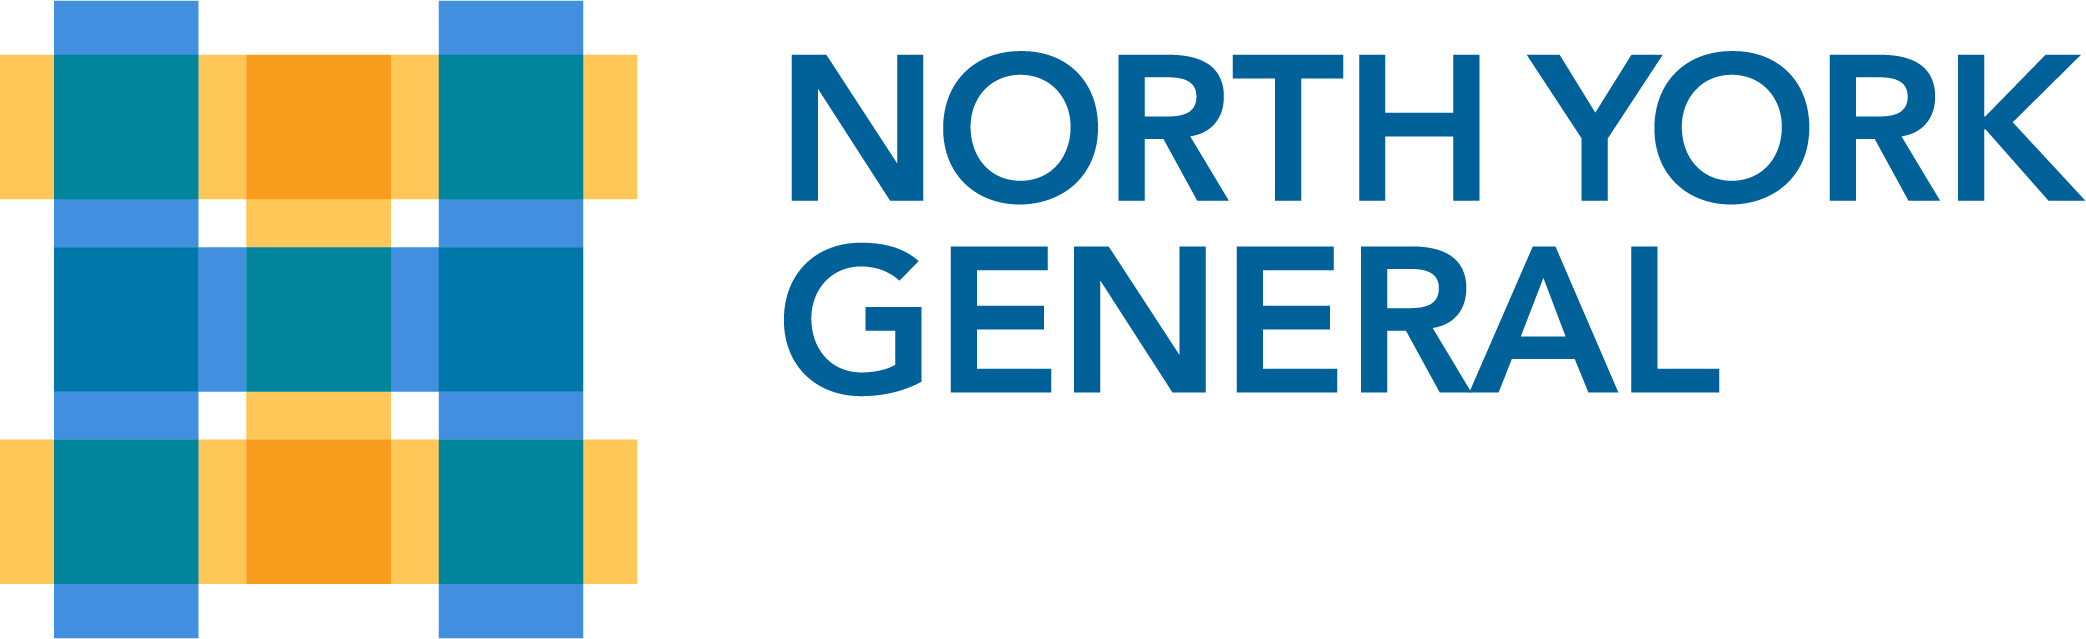 North York General logo